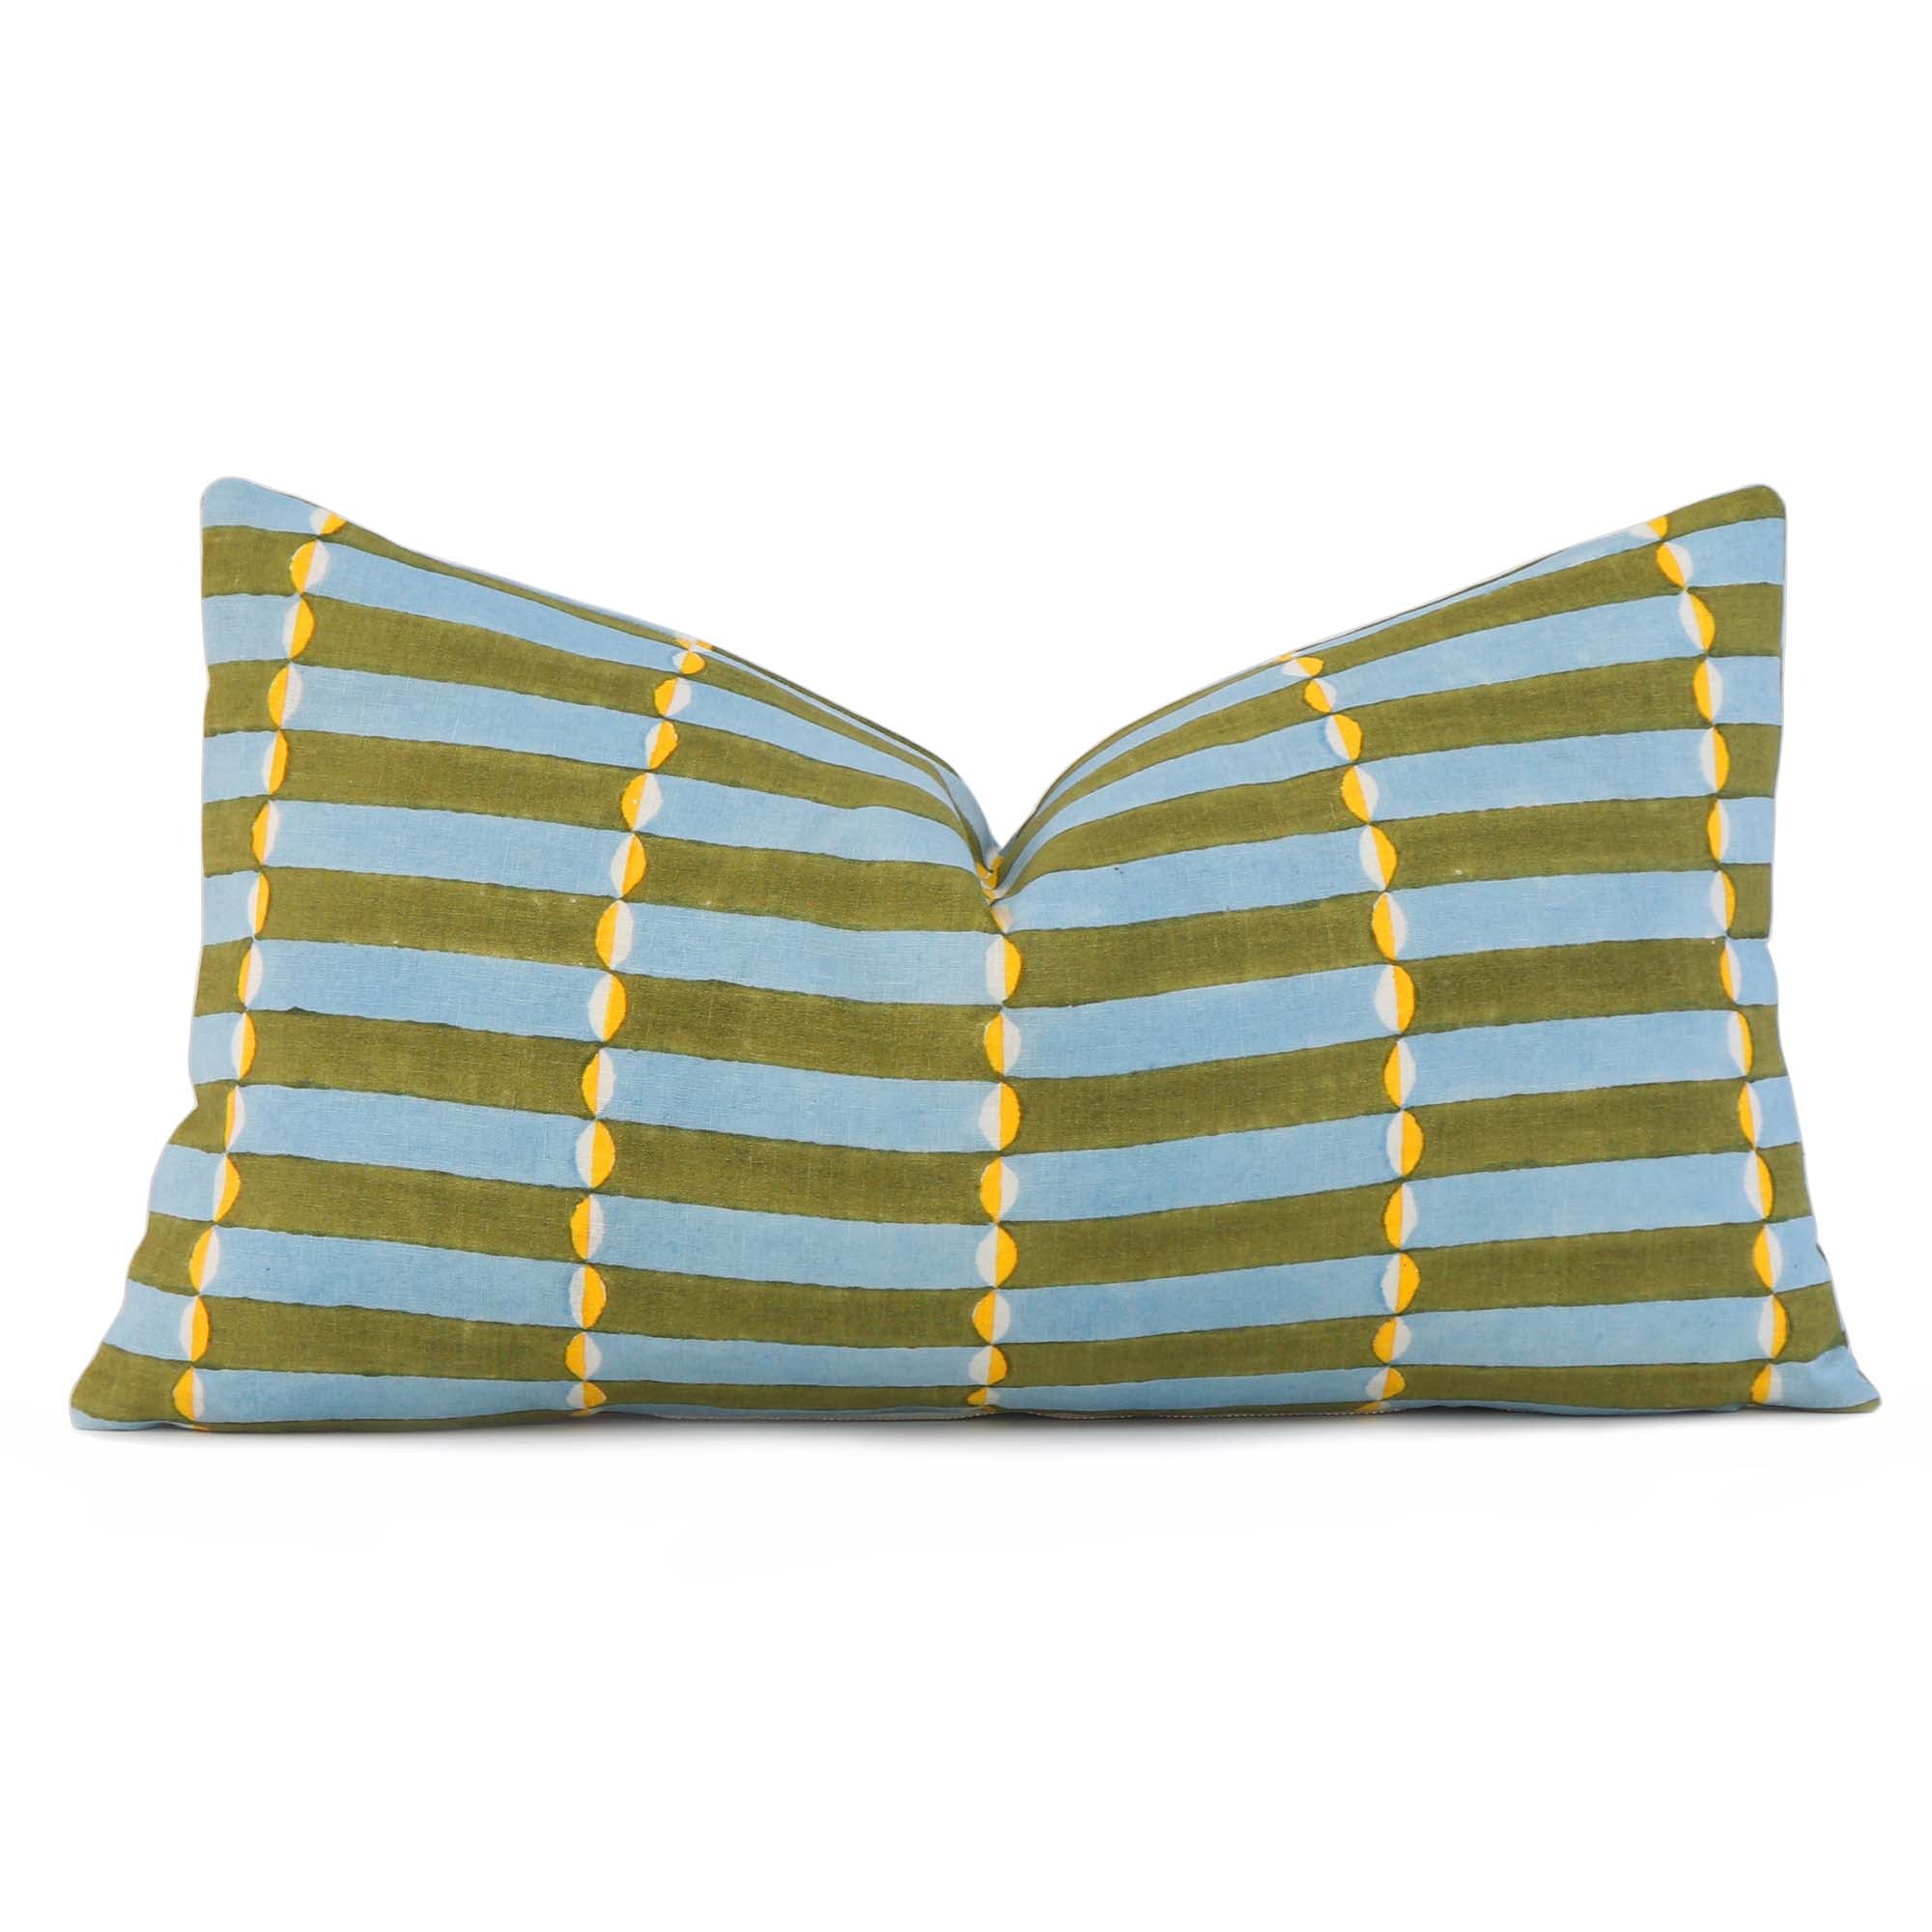 Schumacher Luna Khaki and Turquoise Blue Graphic Block Print Decorative Lumbar Throw Pillow Cover